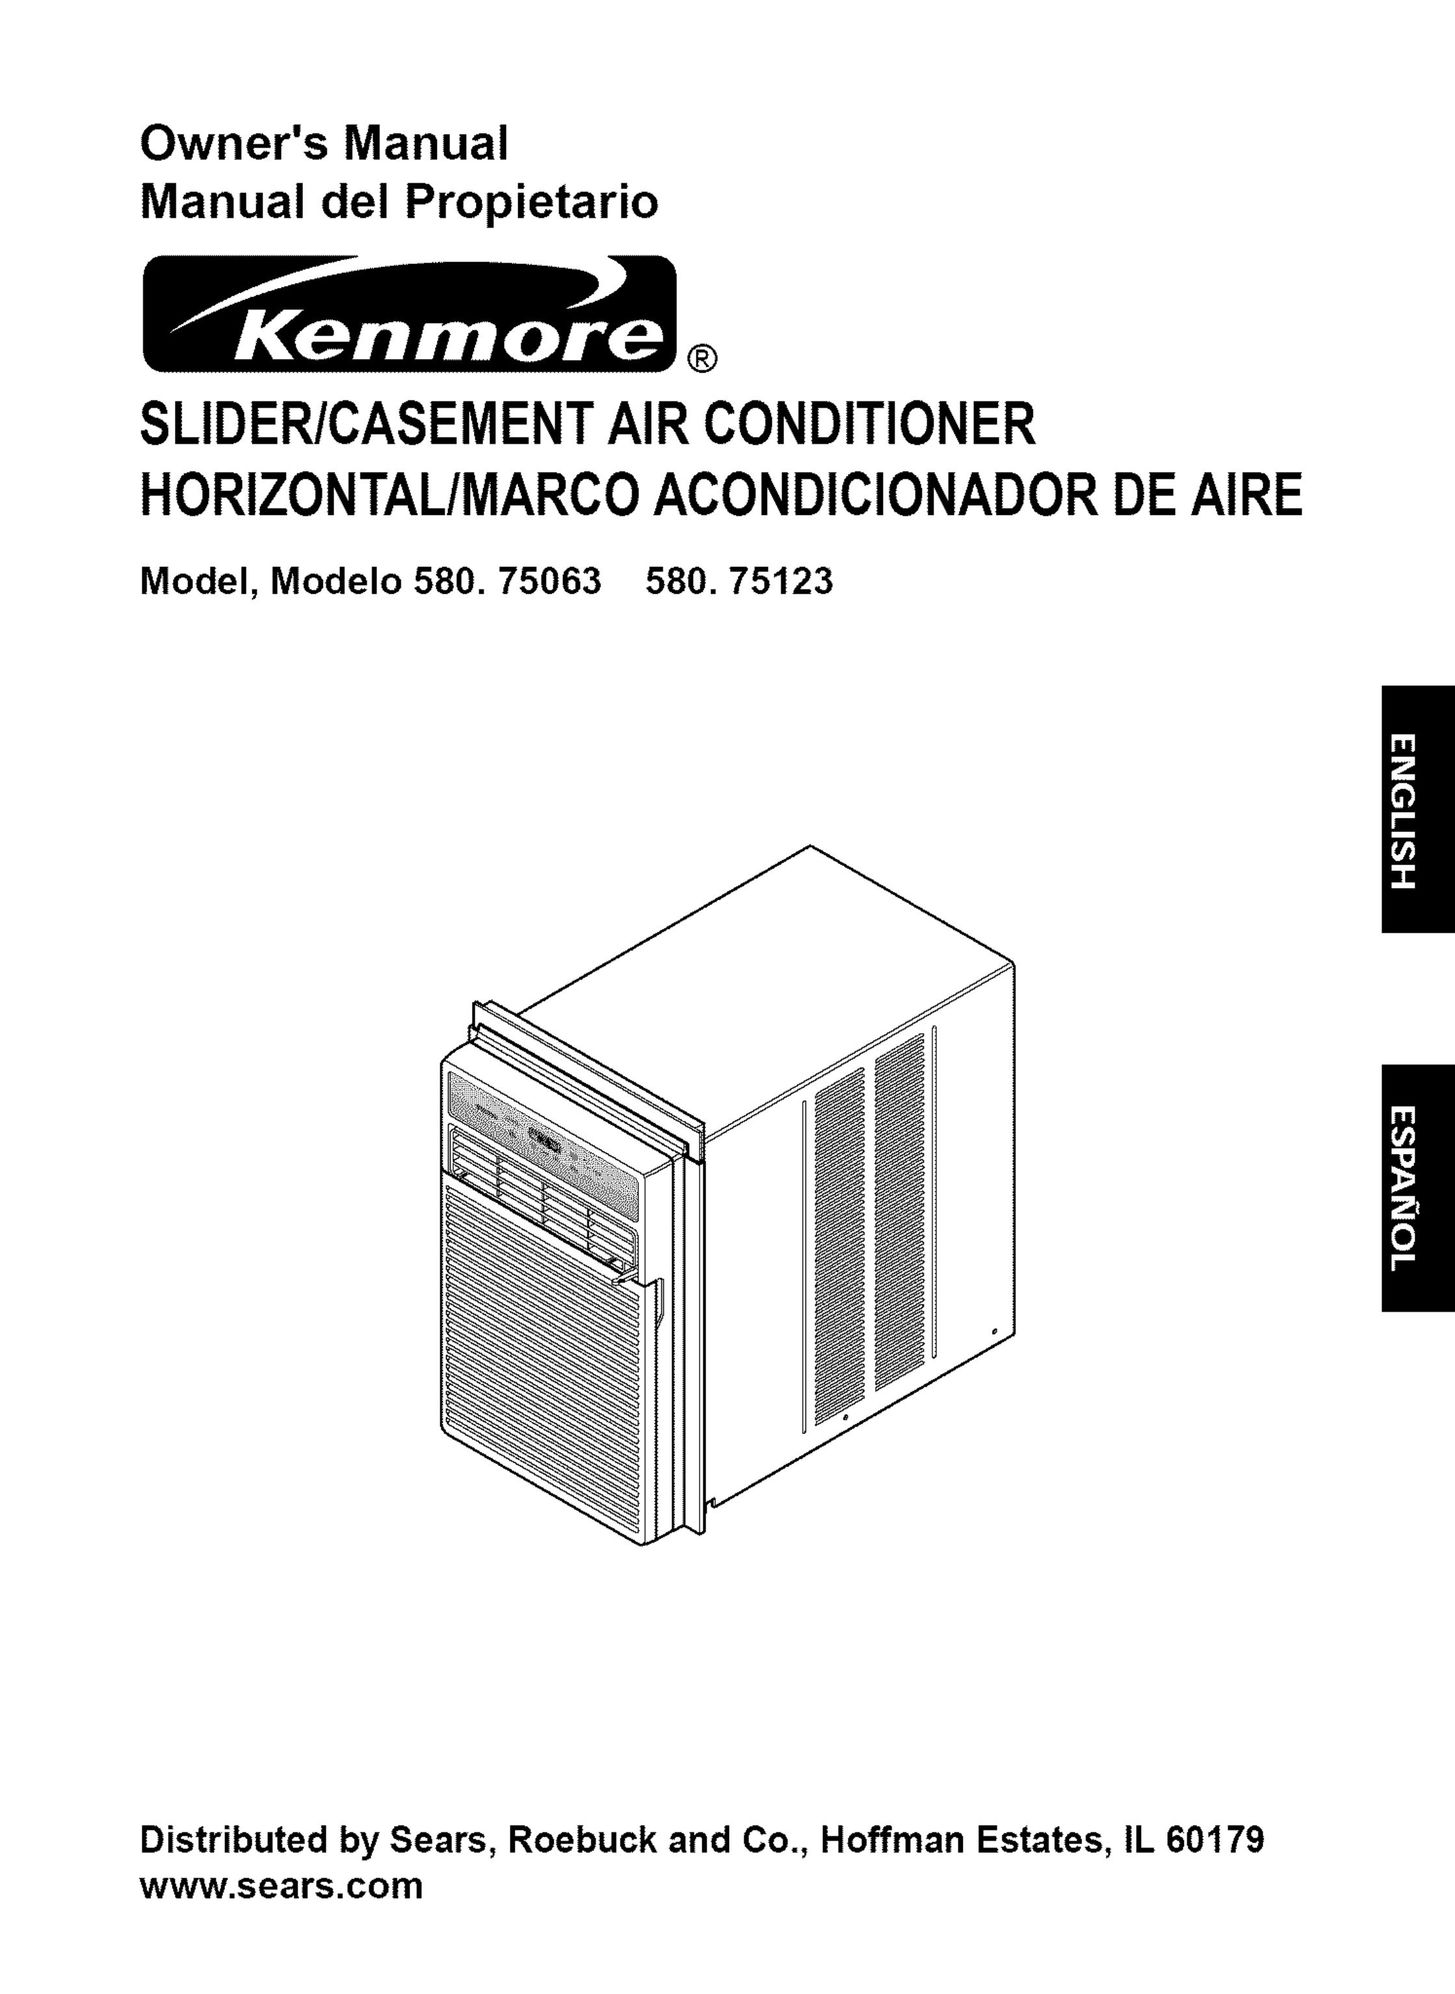 Kenmore 580.75123 Air Conditioner User Manual